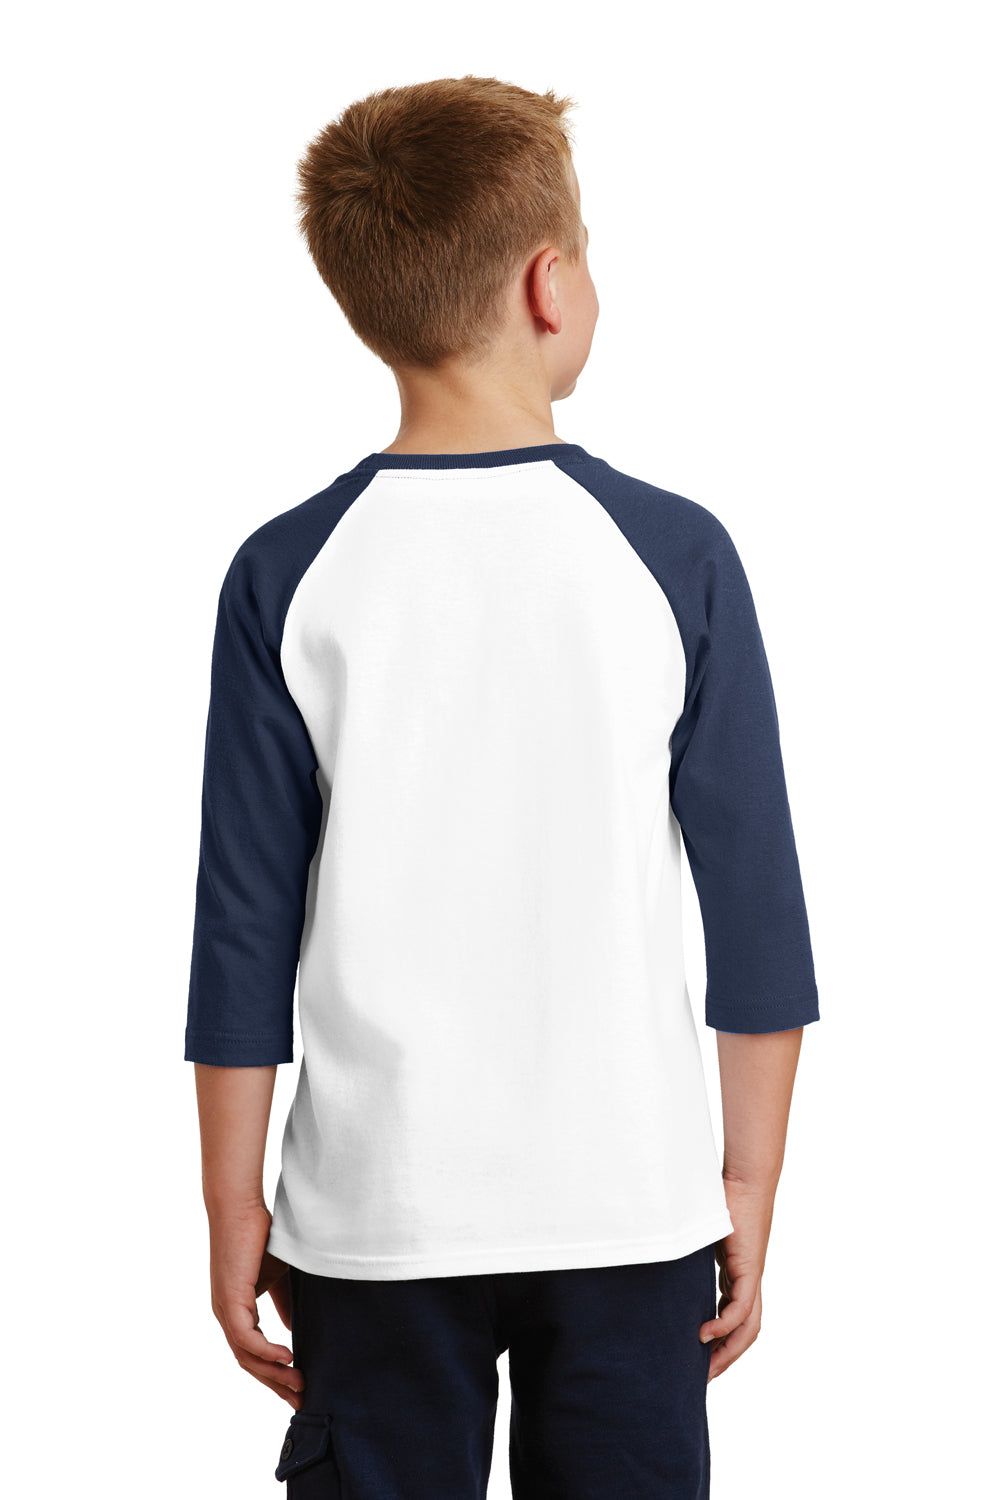 Port & Company PC55YRS Youth Core Moisture Wicking 3/4 Sleeve Crewneck T-Shirt White/Navy Blue Back